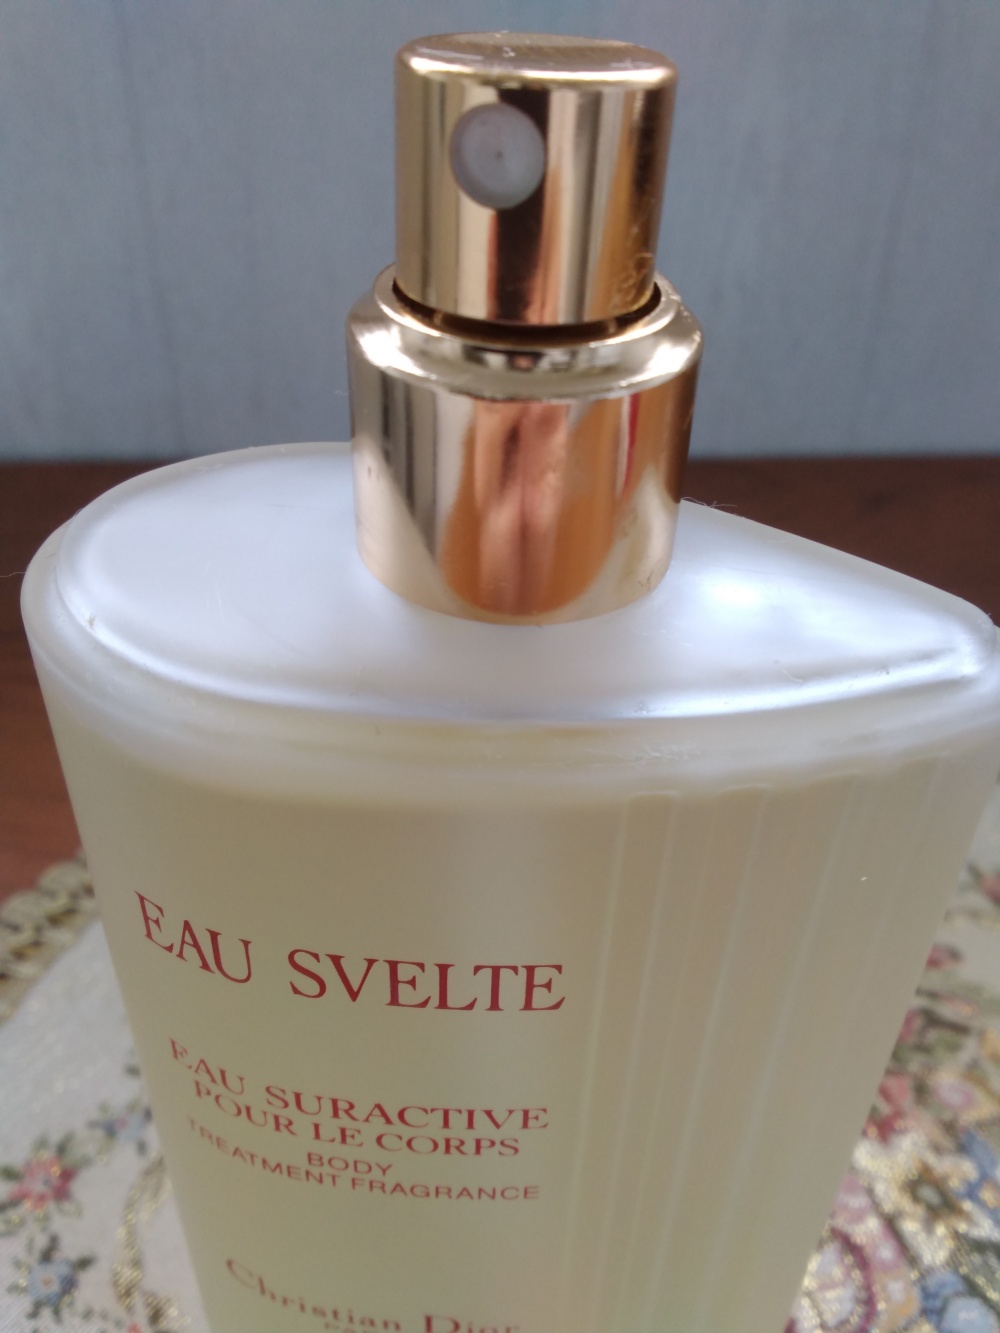 Christian Dior Eau Svelte Body Treatment Fragrance 200 ml (реально 195 ml)